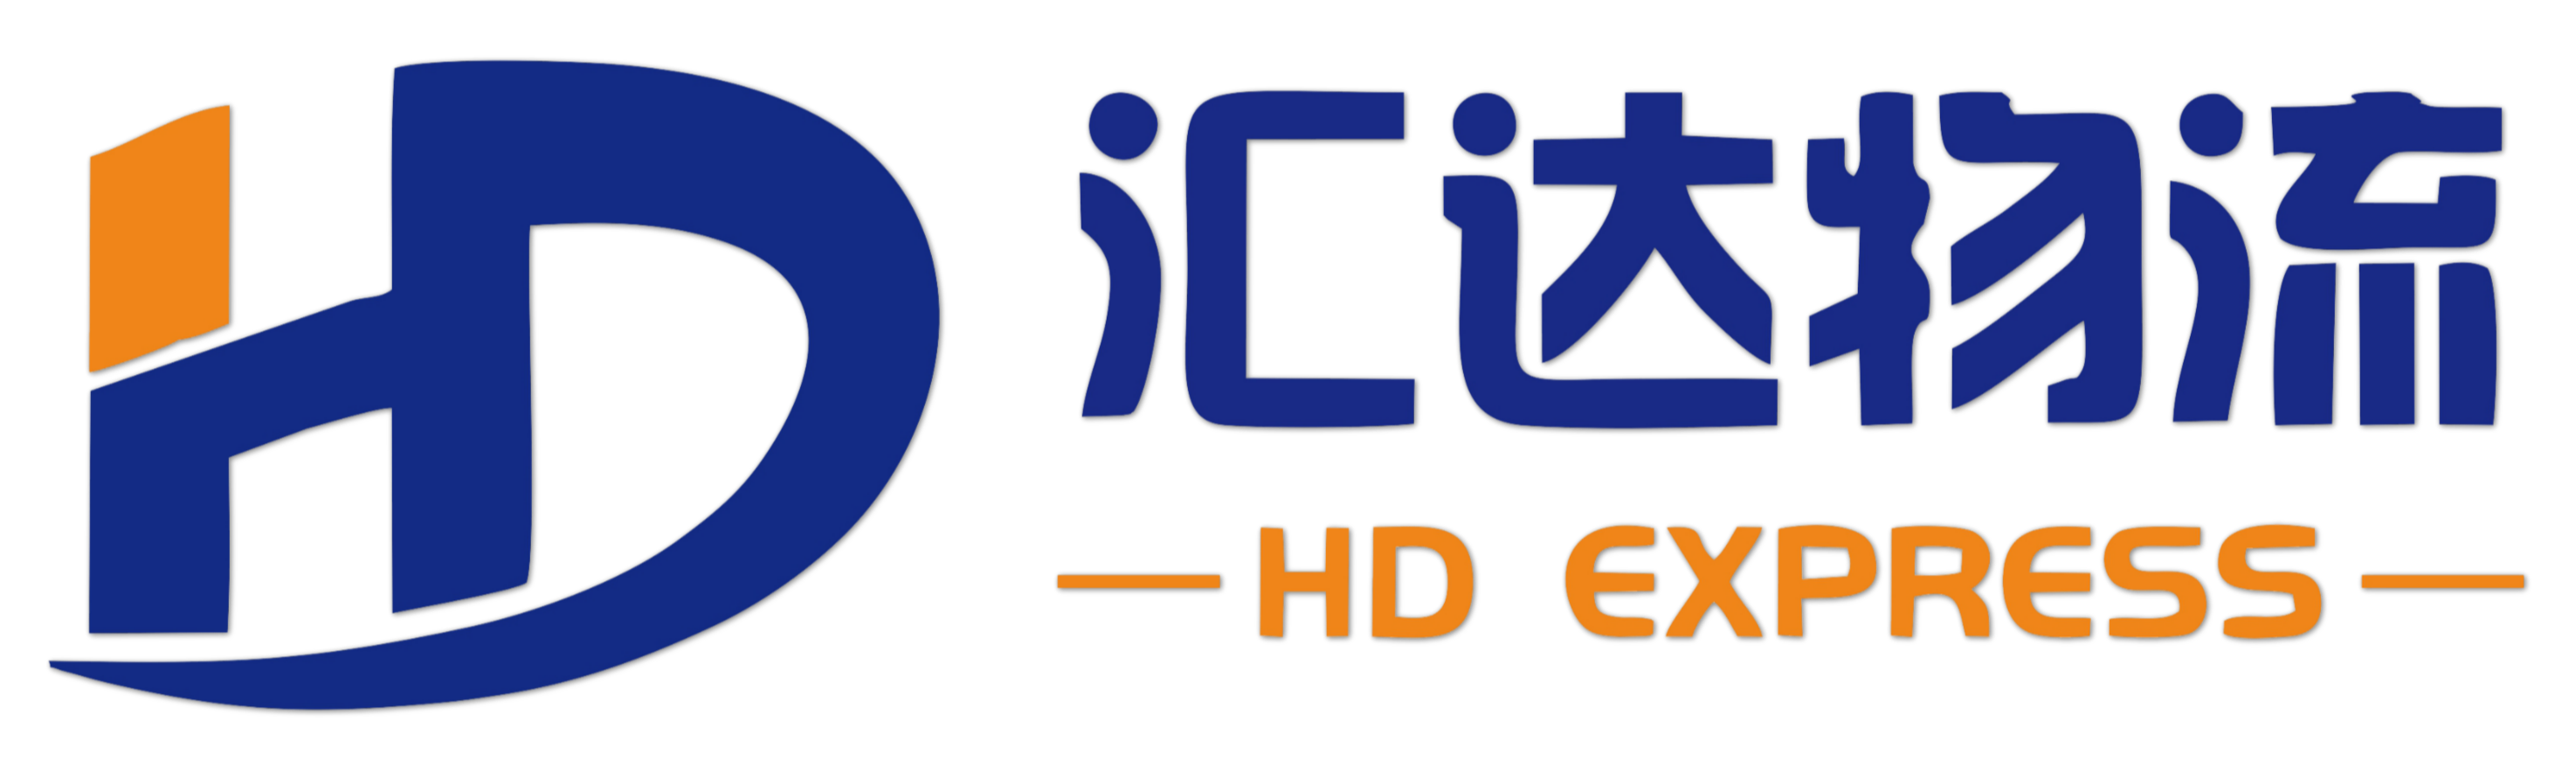 HD-Express